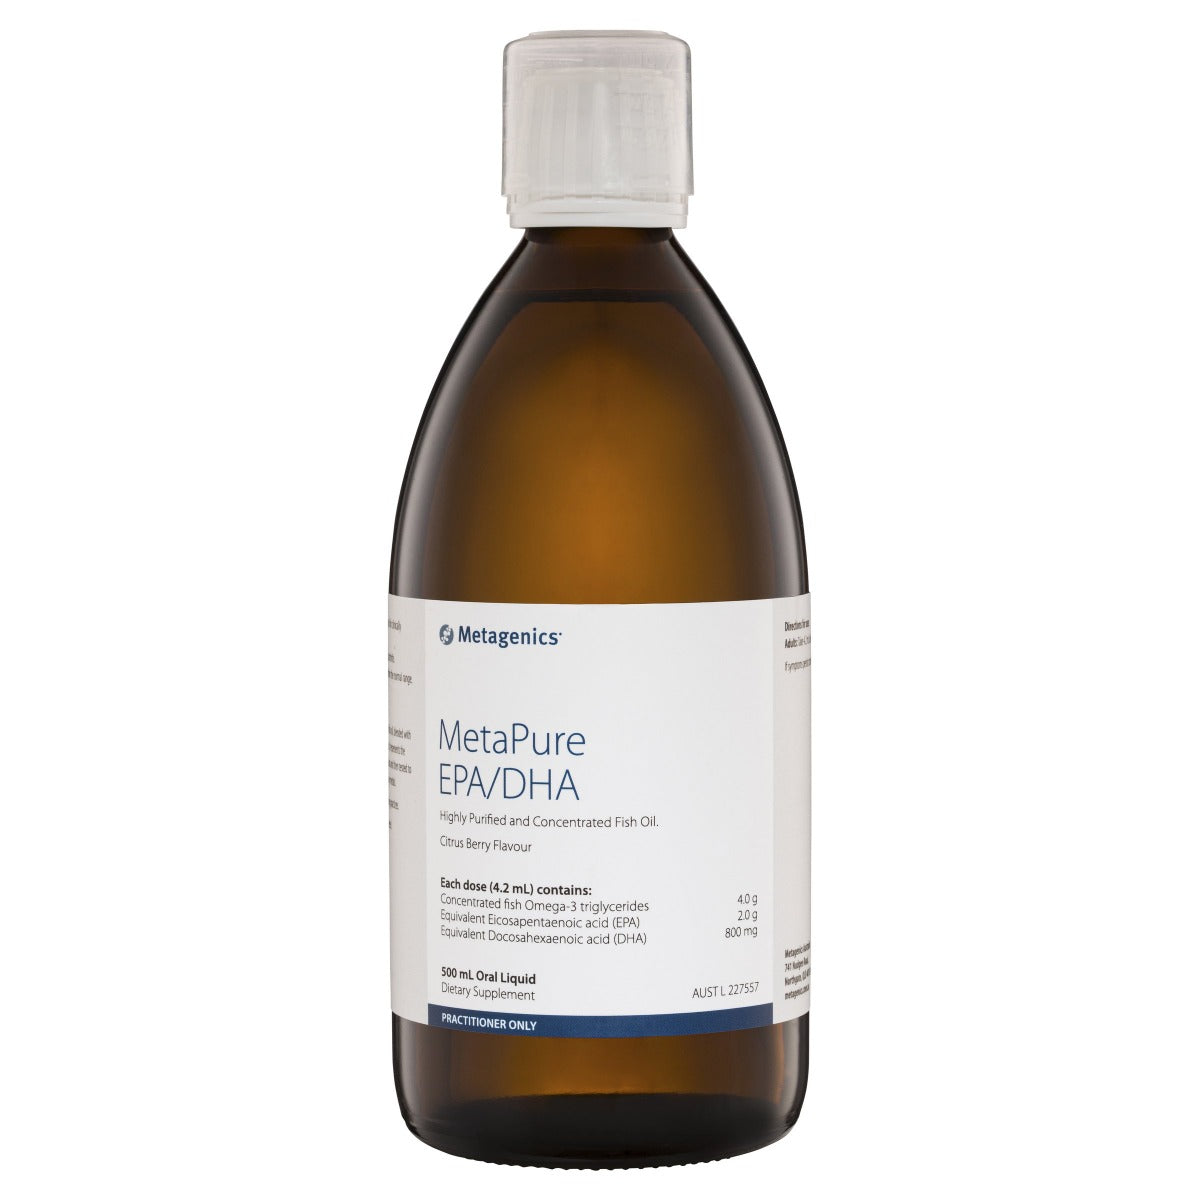 Metagenics MetaPure EPA/DHA Fish Oil Omega-3 500ml 10% off RRP ...